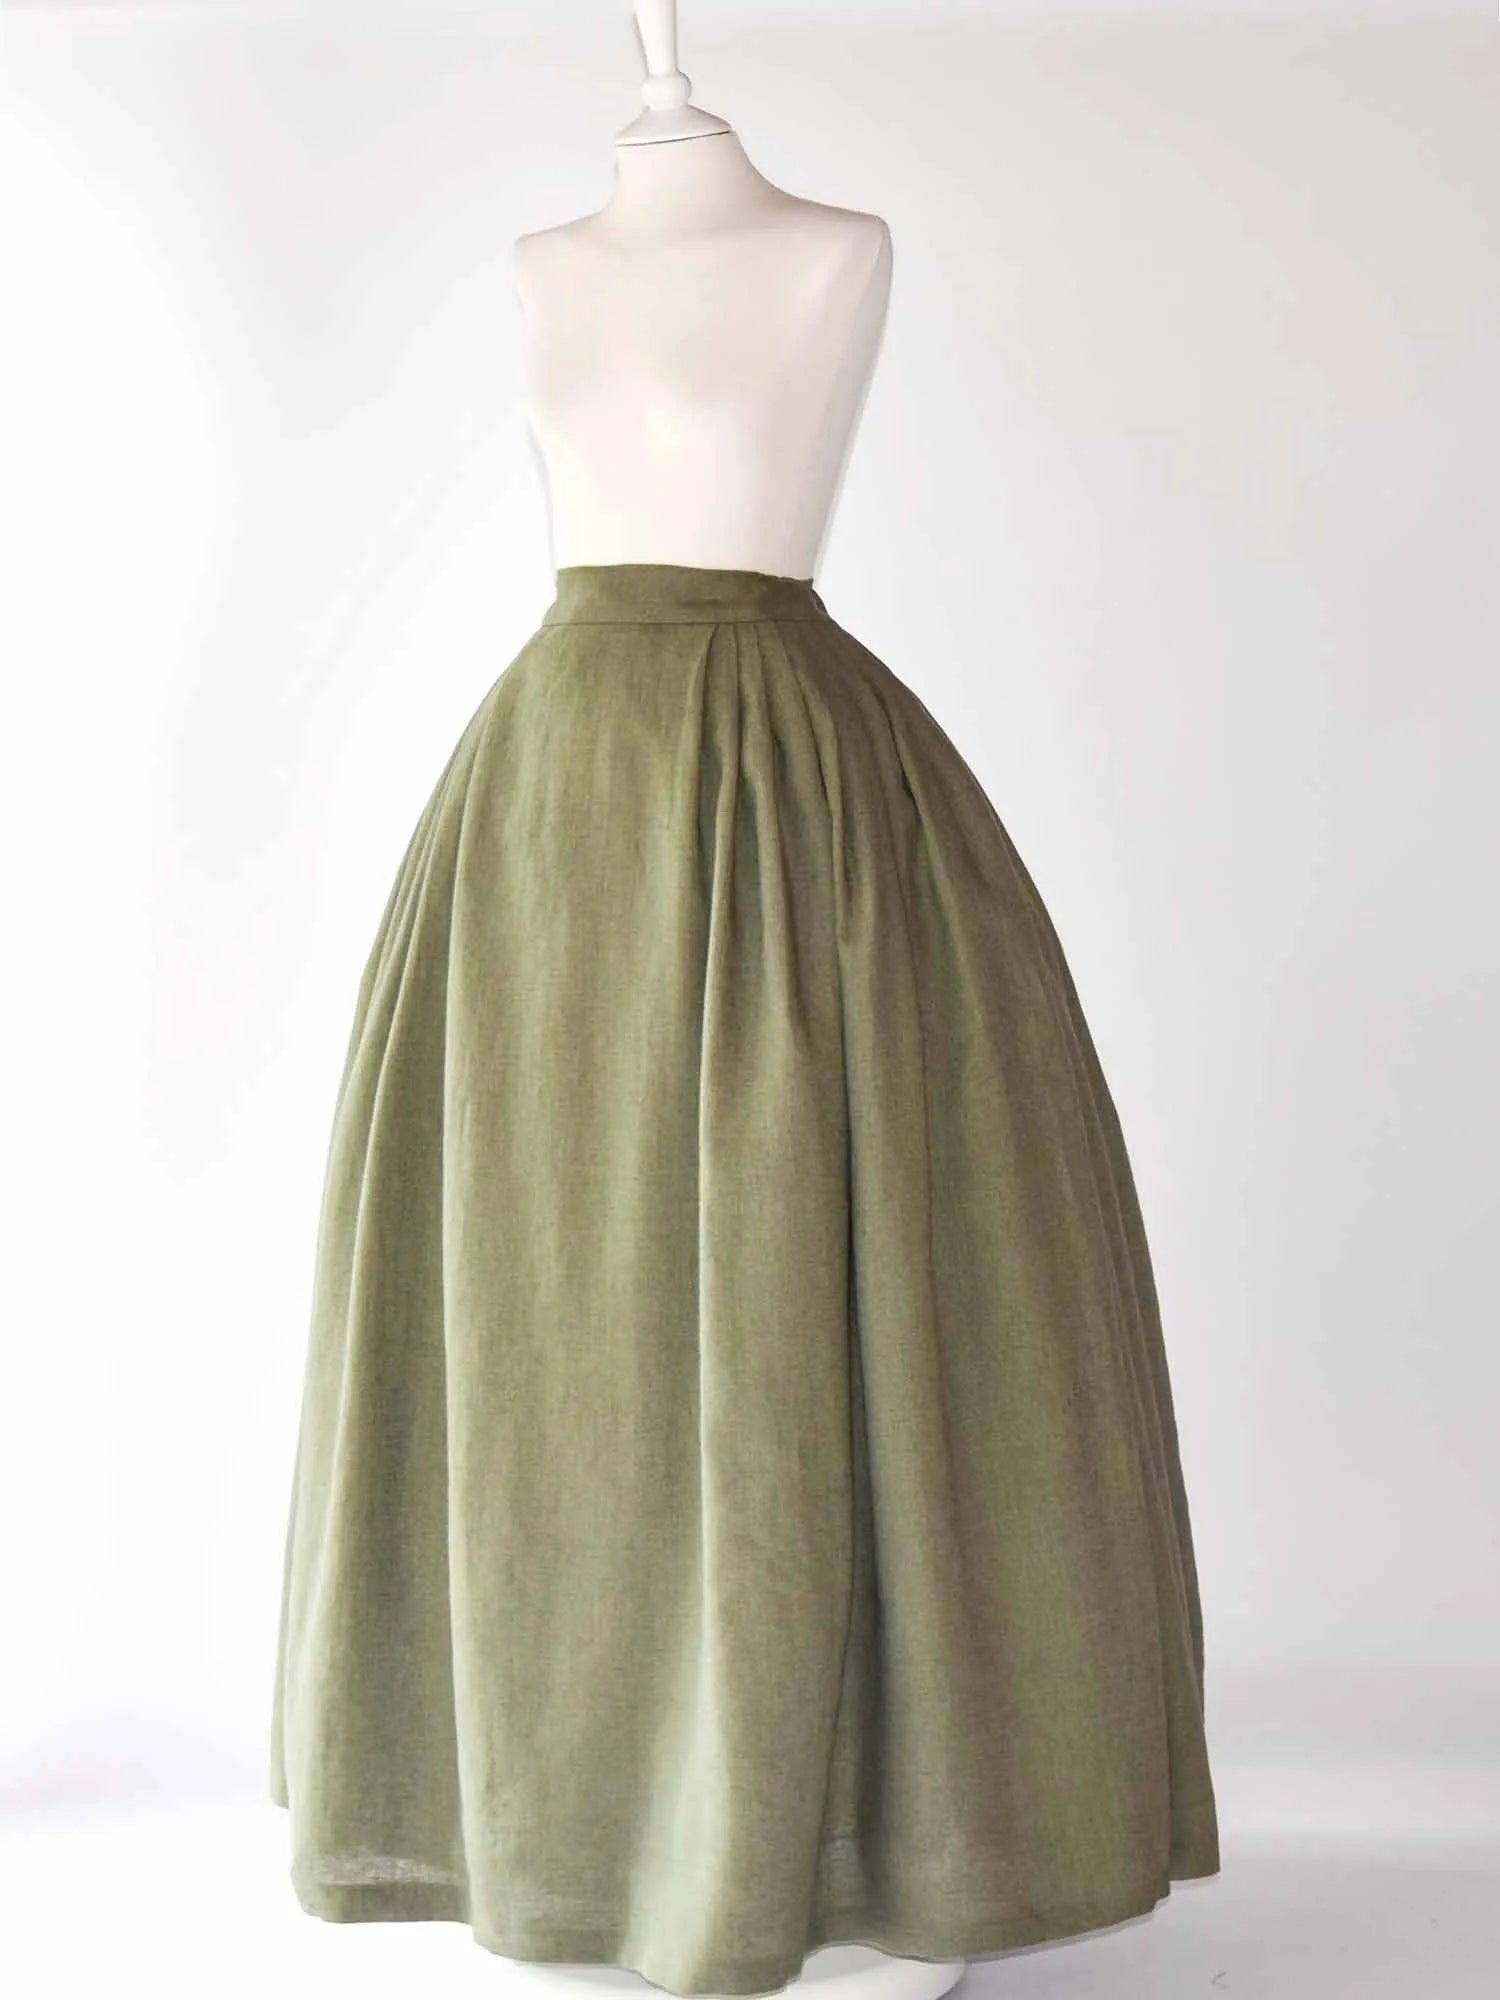 HELOISE, Historical Skirt in Sage Green Linen - Atelier Serraspina